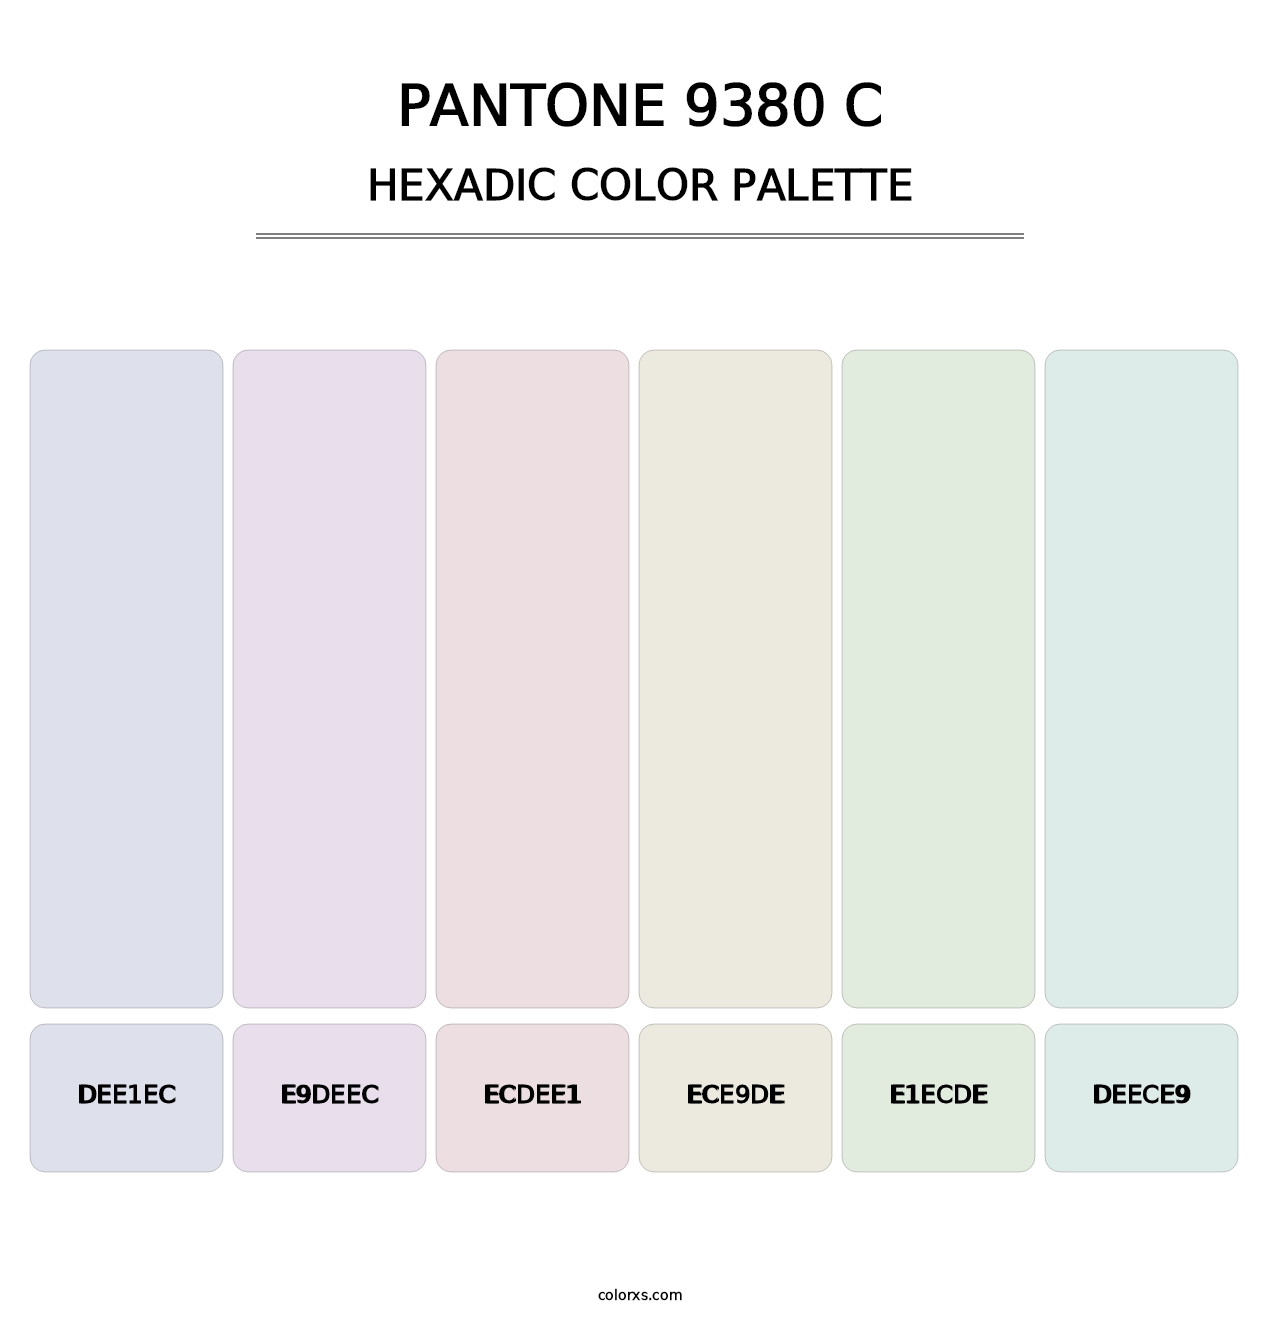 PANTONE 9380 C - Hexadic Color Palette